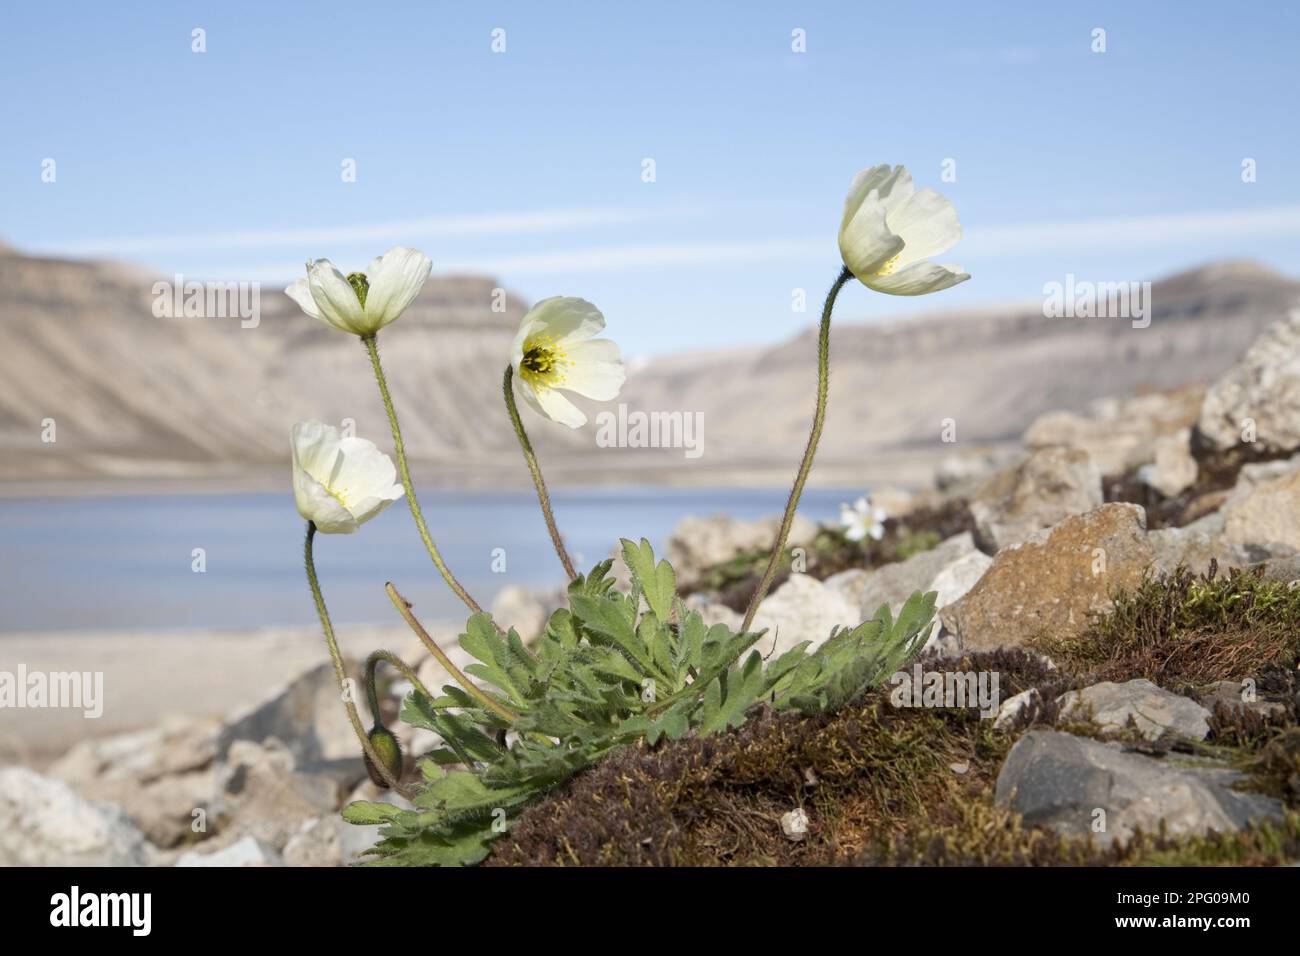 Svalbard Poppy (Papaver dahlianum) flowering, growing in fjord habitat, Spitzbergen, Svalbard Stock Photo